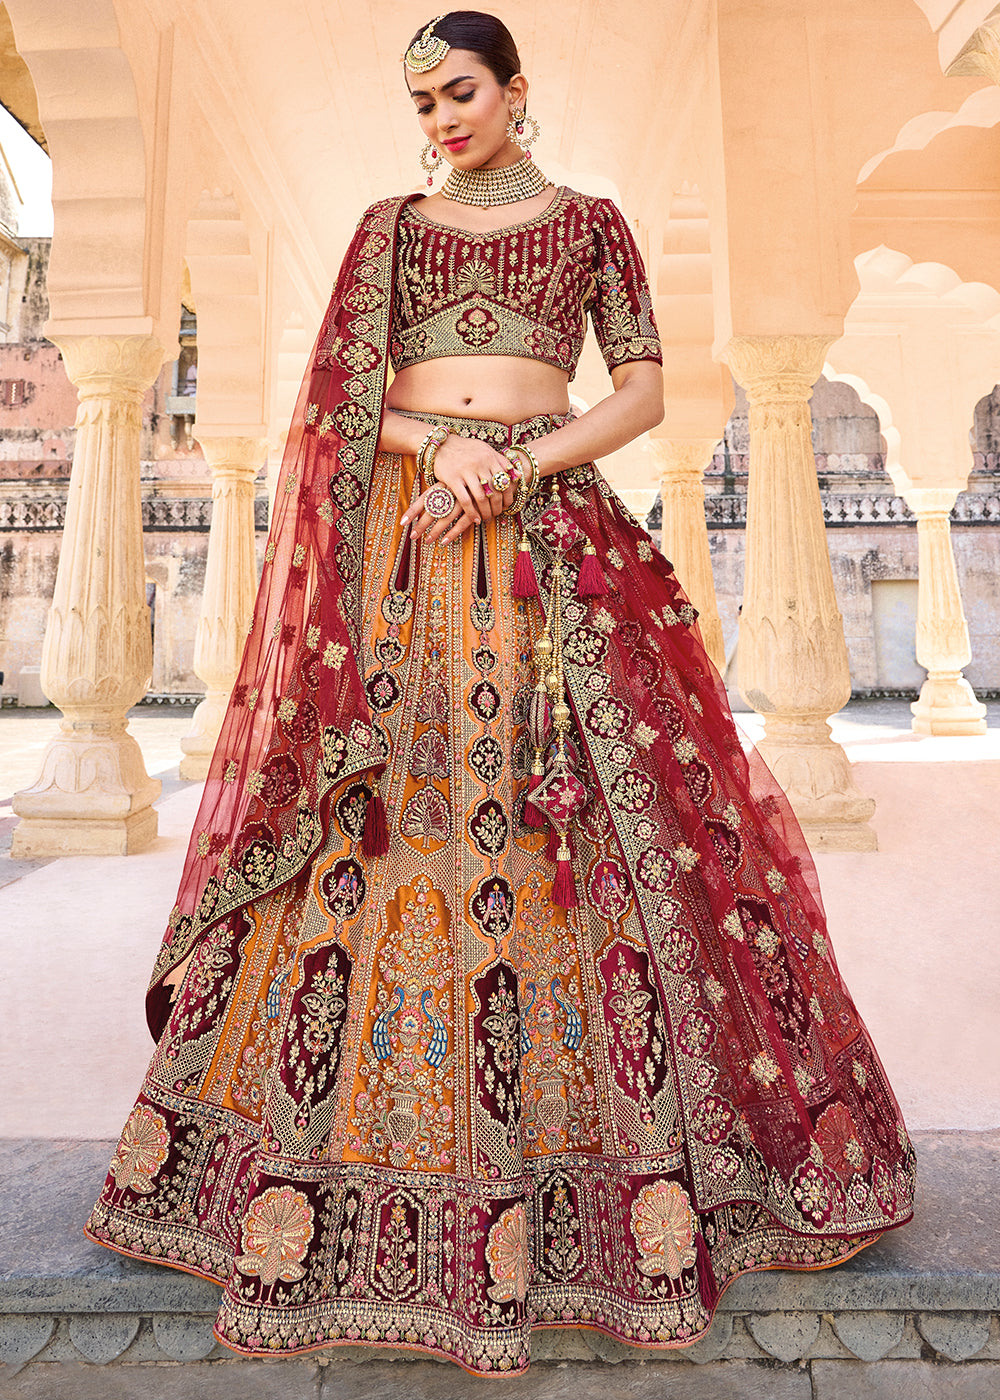 Amazingly Beautiful Red and Navy Bridal Lehenga with Gold Zardosi and  Stonework Detailing | Pakistani bridal dresses, Pakistani wedding dresses,  Bridal outfits